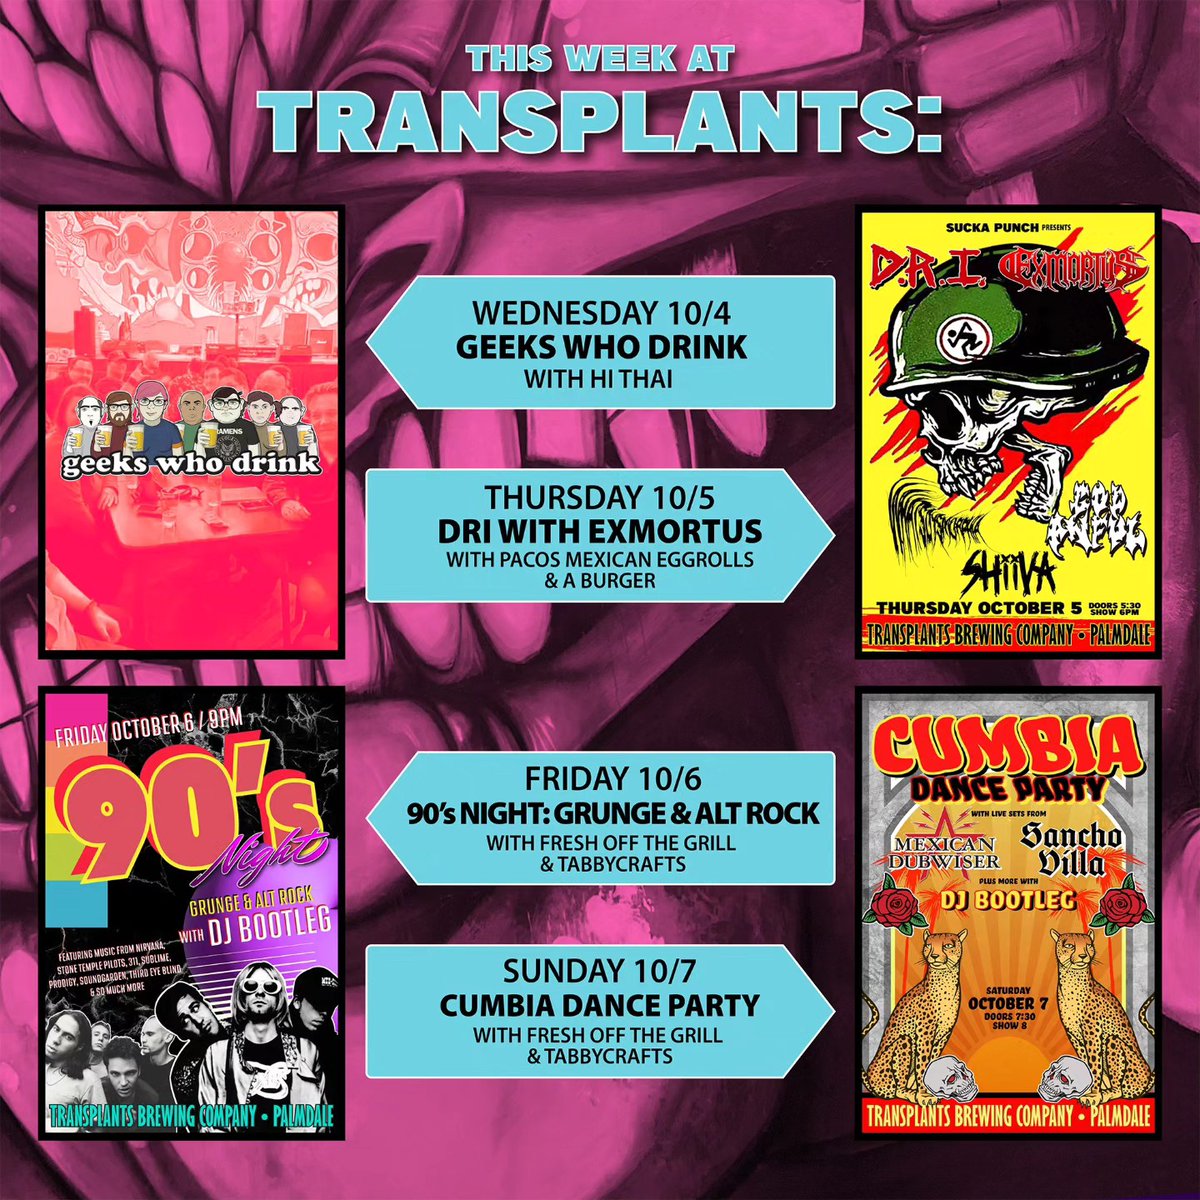 transplantsbrewing.com @geekswhodrink #cumbia #90smusic #grunge #driband #punkmusic #punkrock